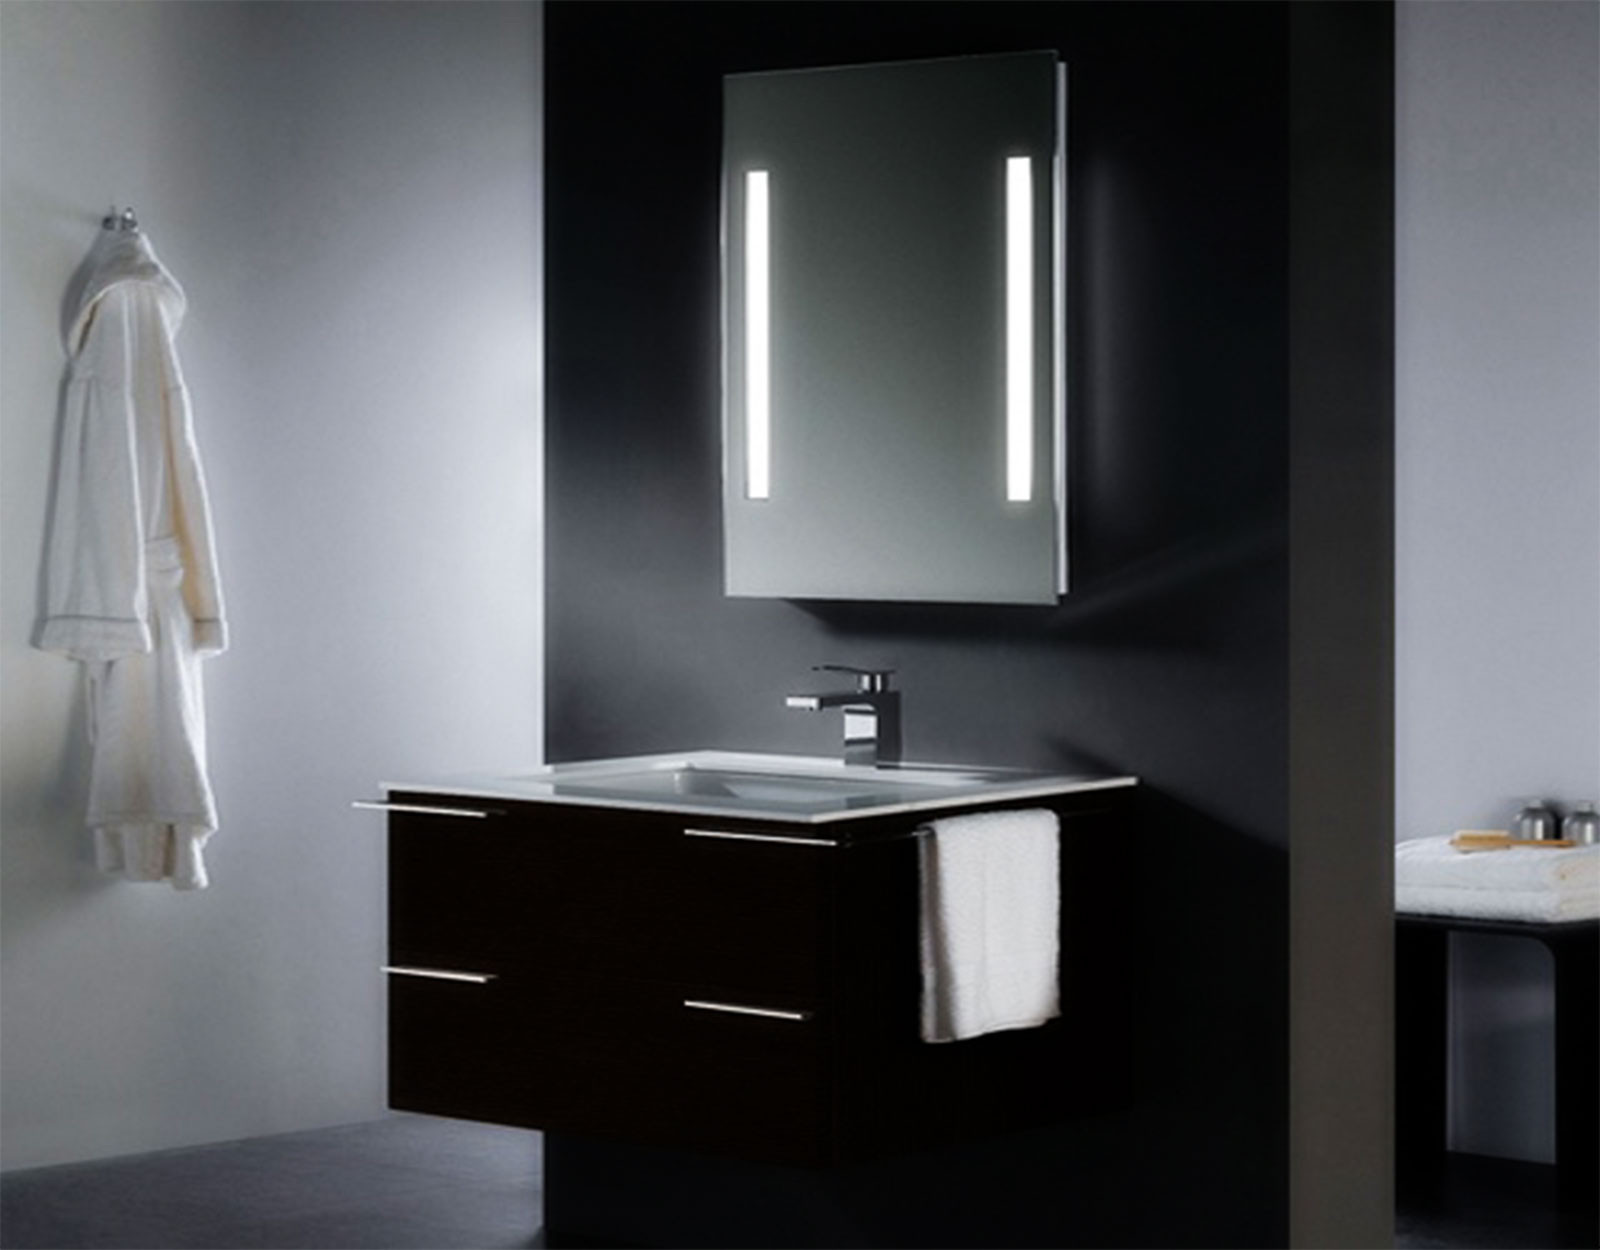 Bathroom Vanity Mirror With Lights
 Bathroom Vanity Set With Lighted Mirrors Furniture Ideas